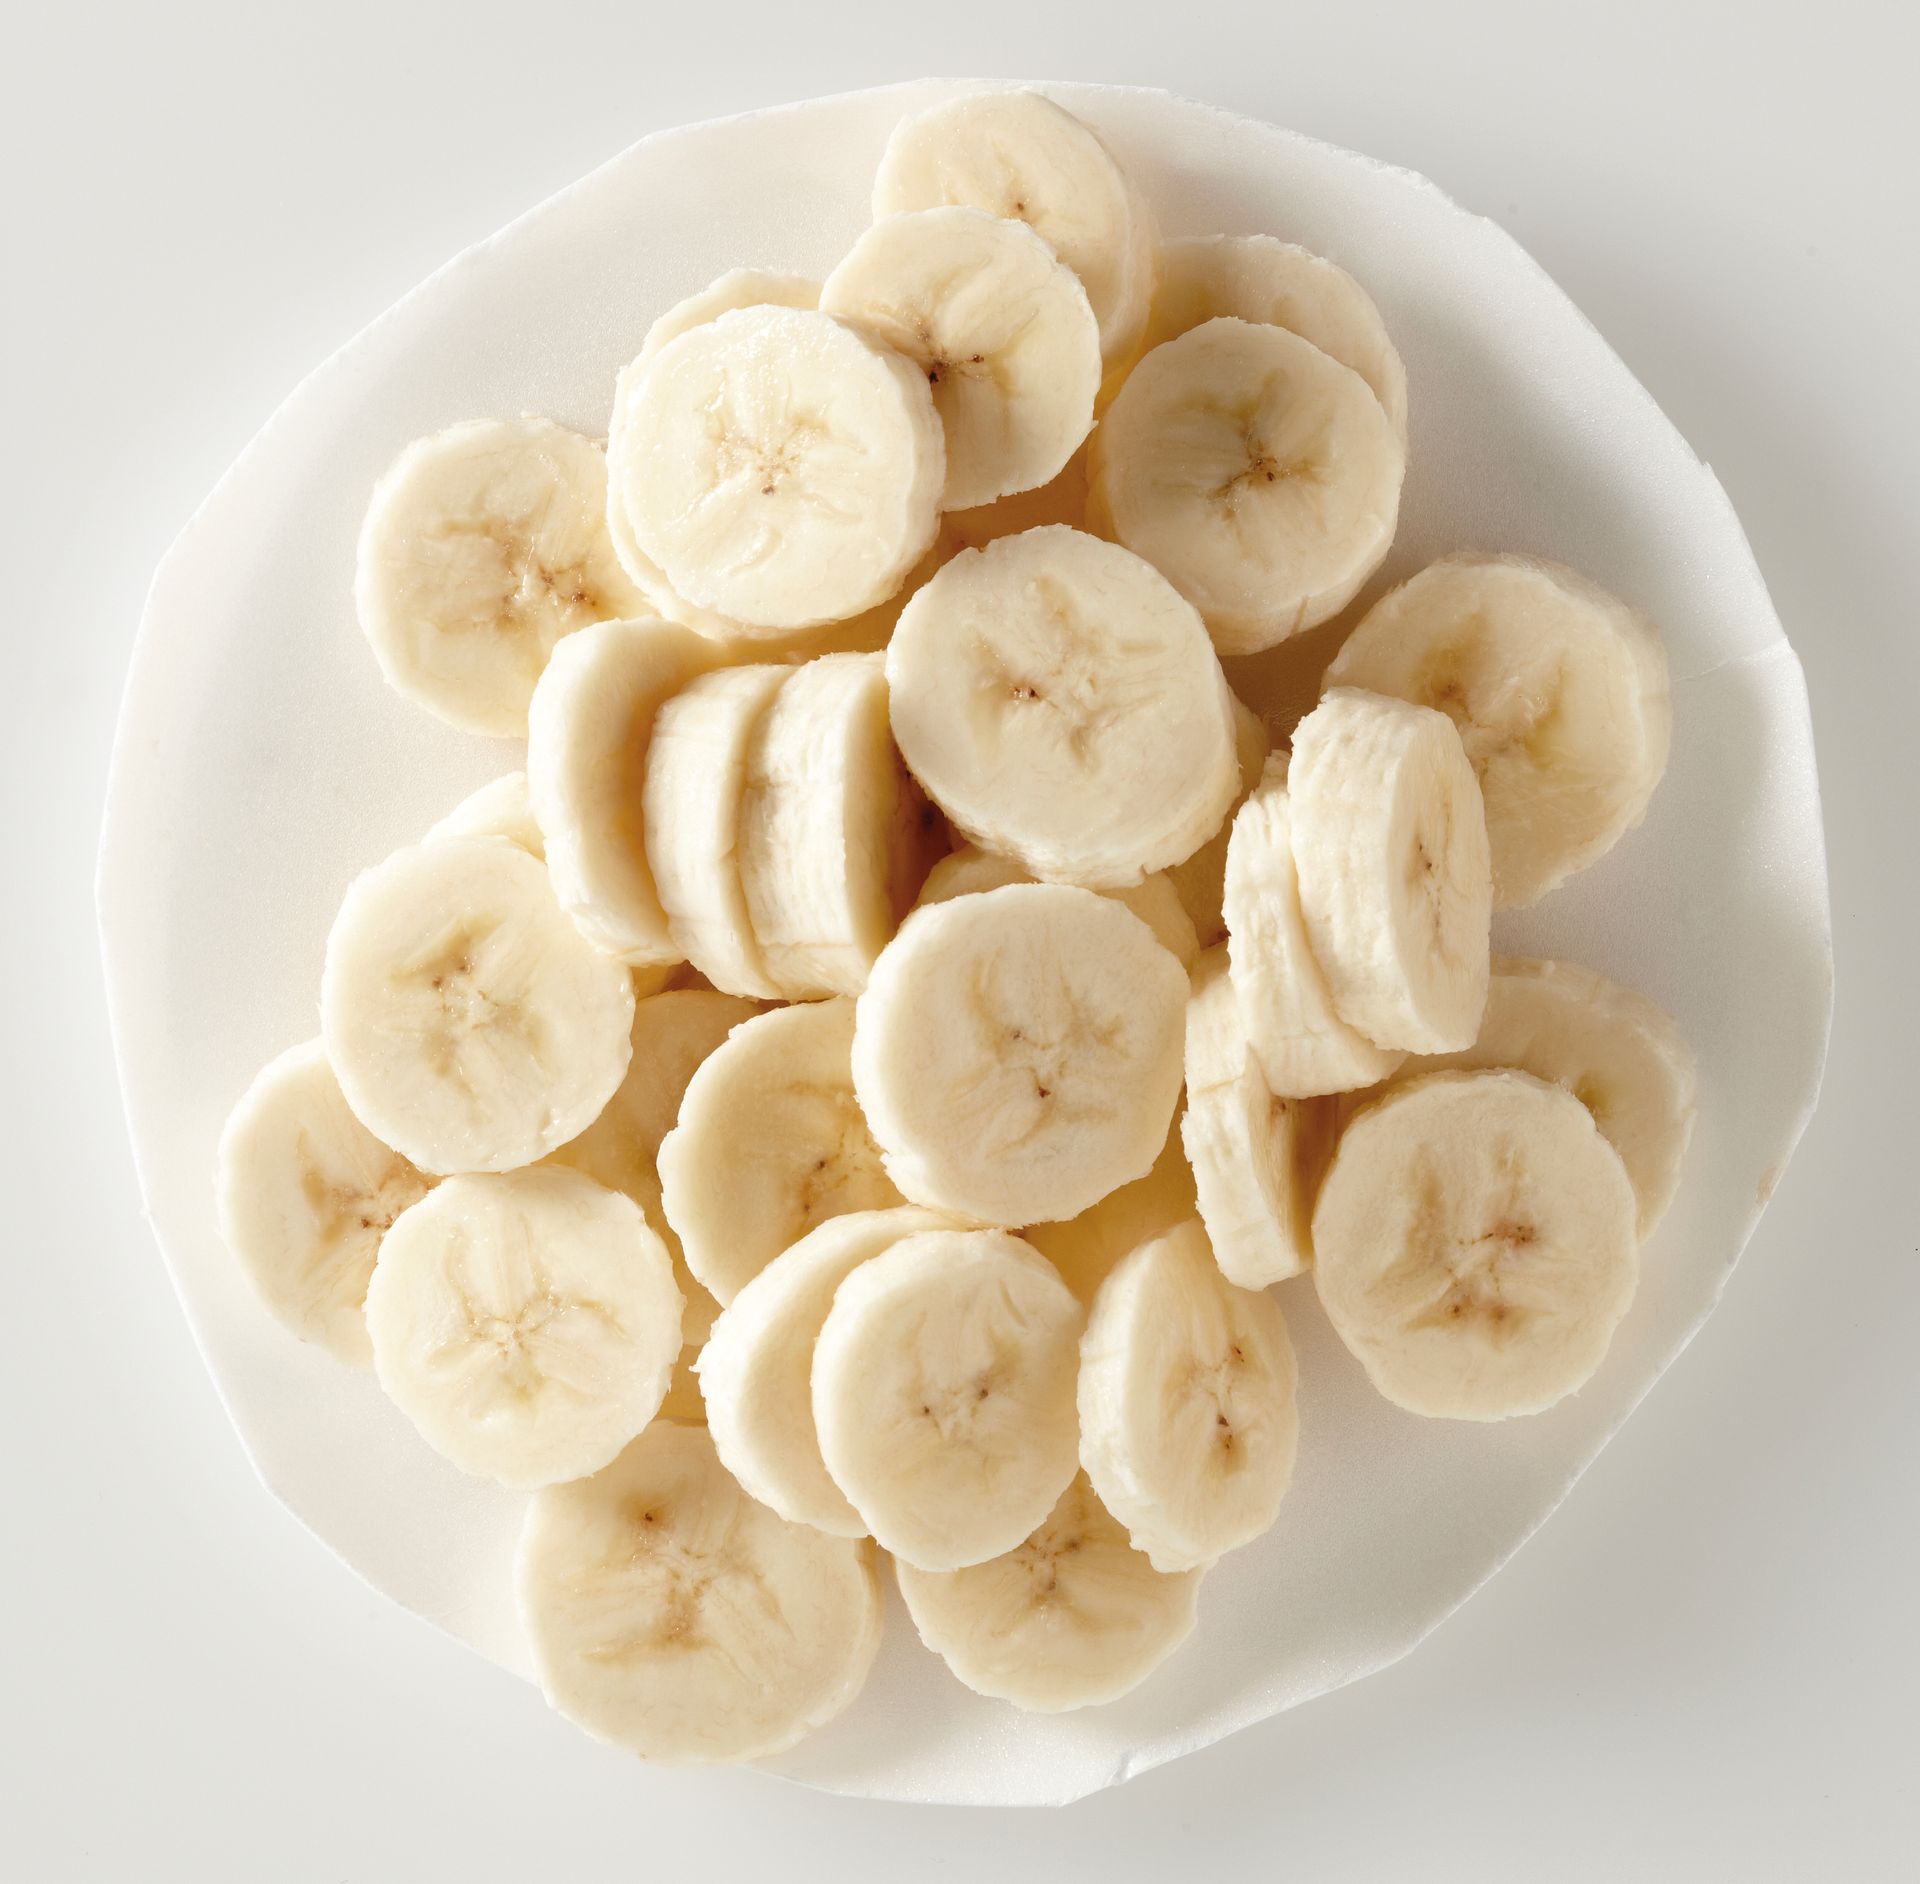 Sliced bananas on a plate.